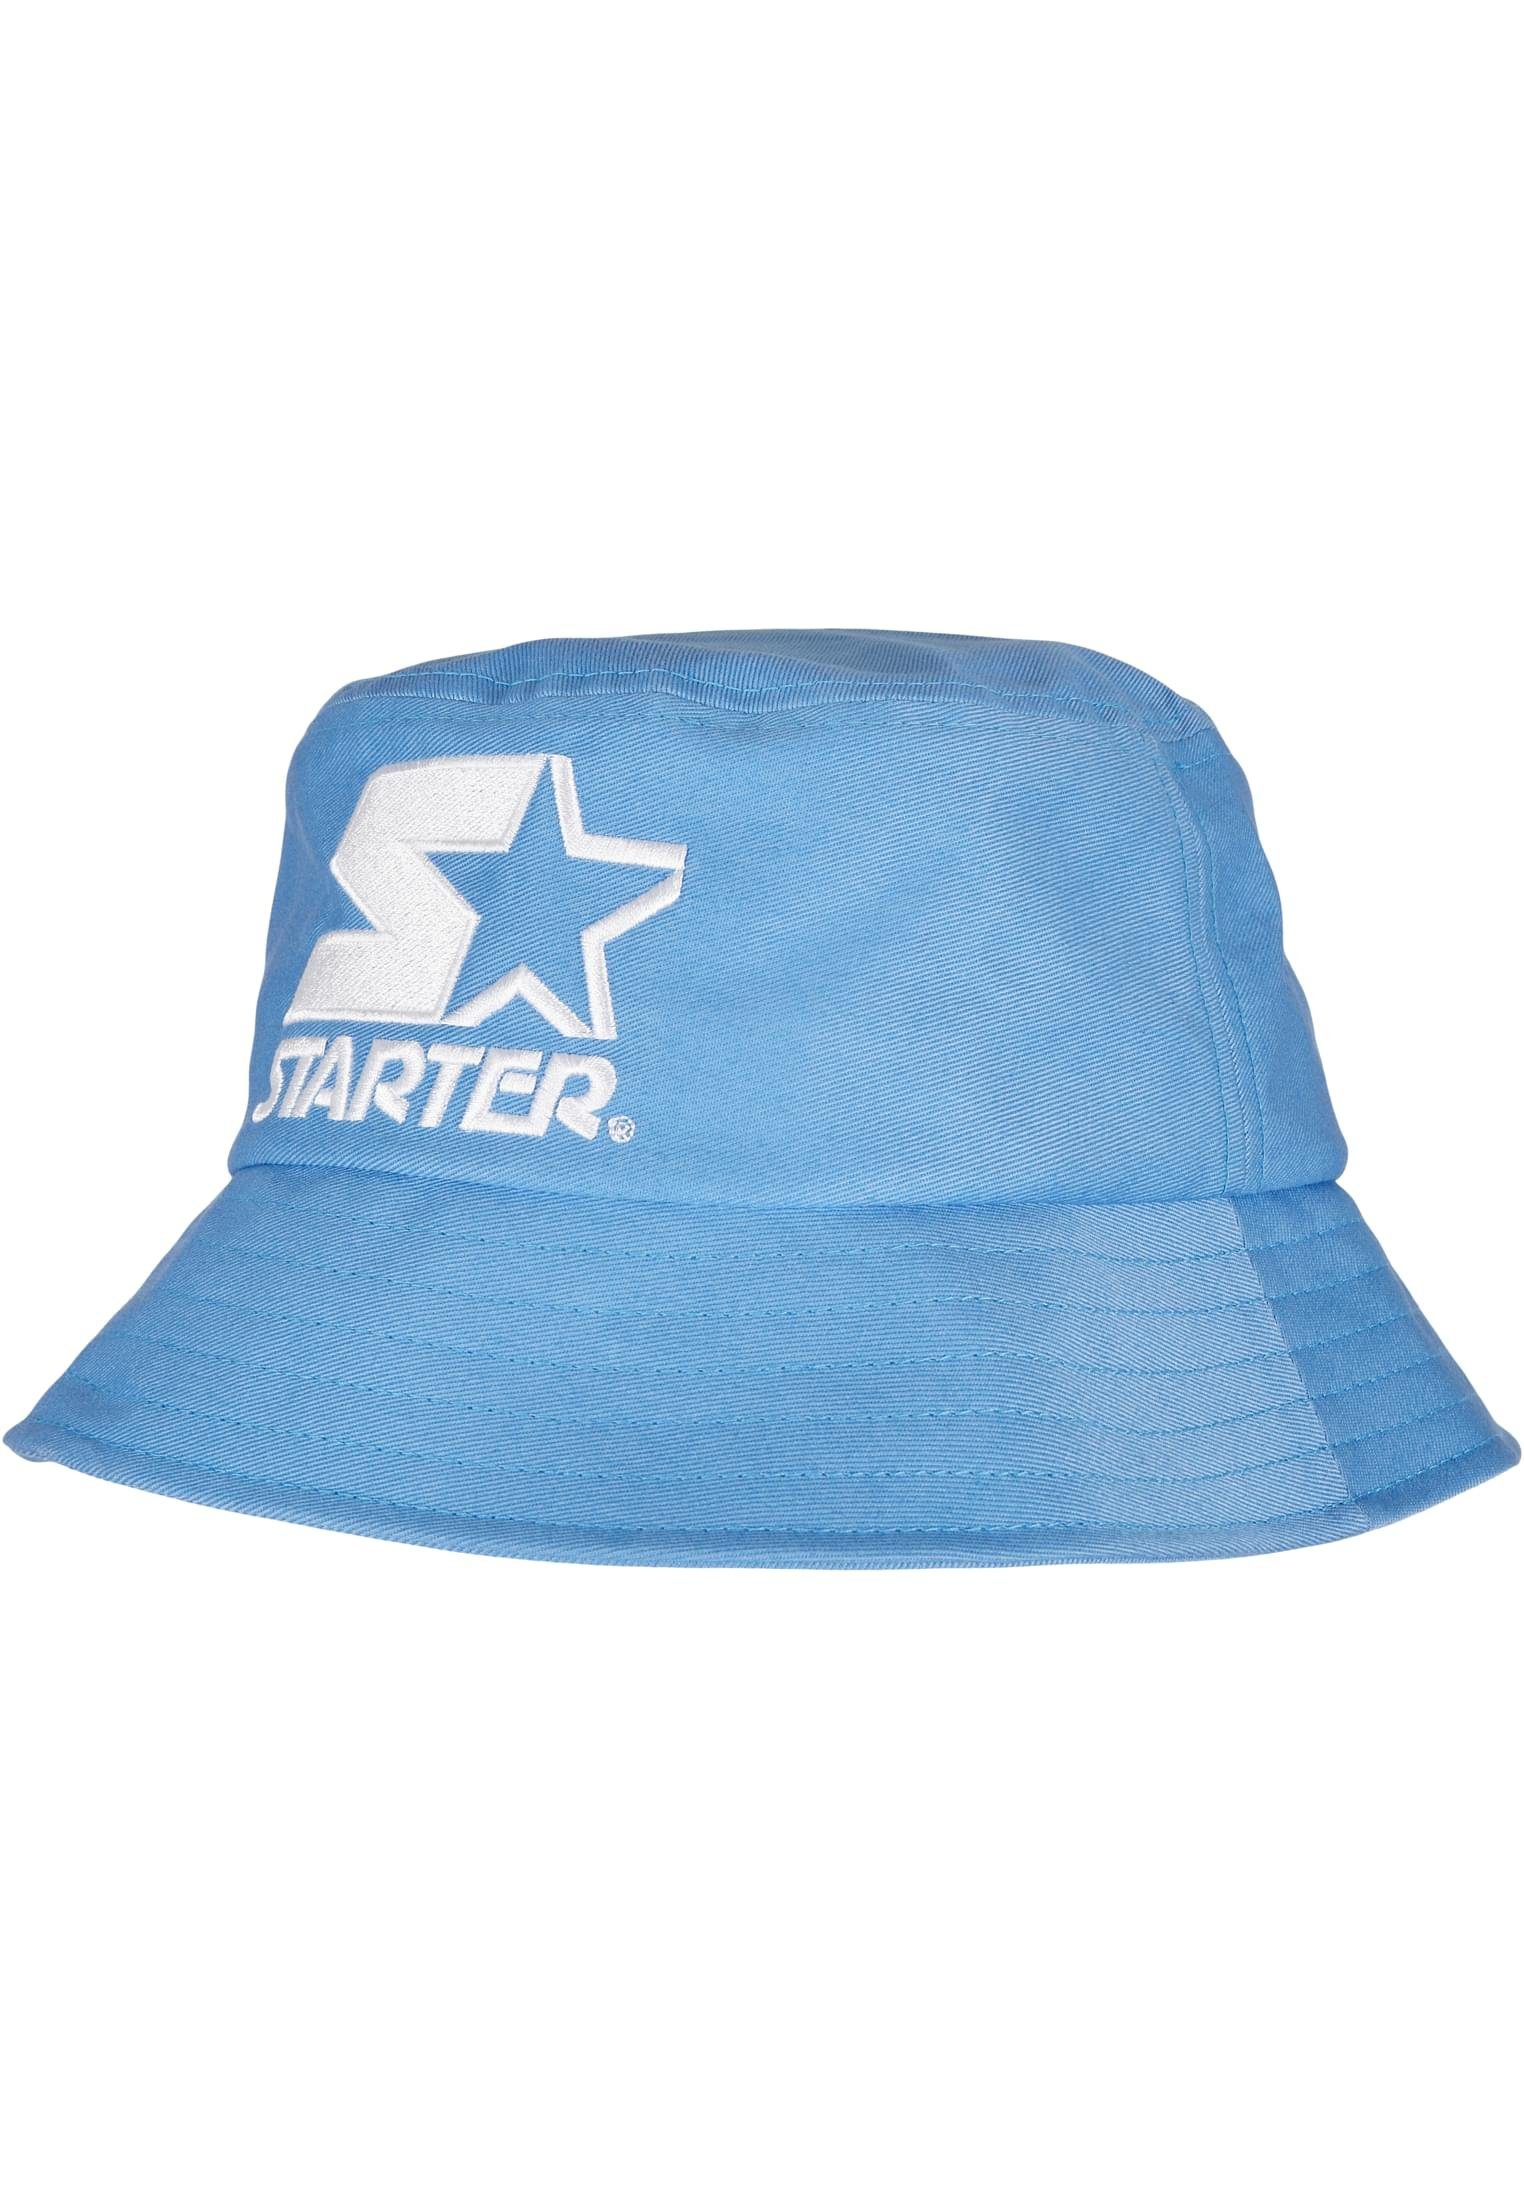 Starter Black Label Flex Cap Basic Hat horizonblue Bucket Accessoires